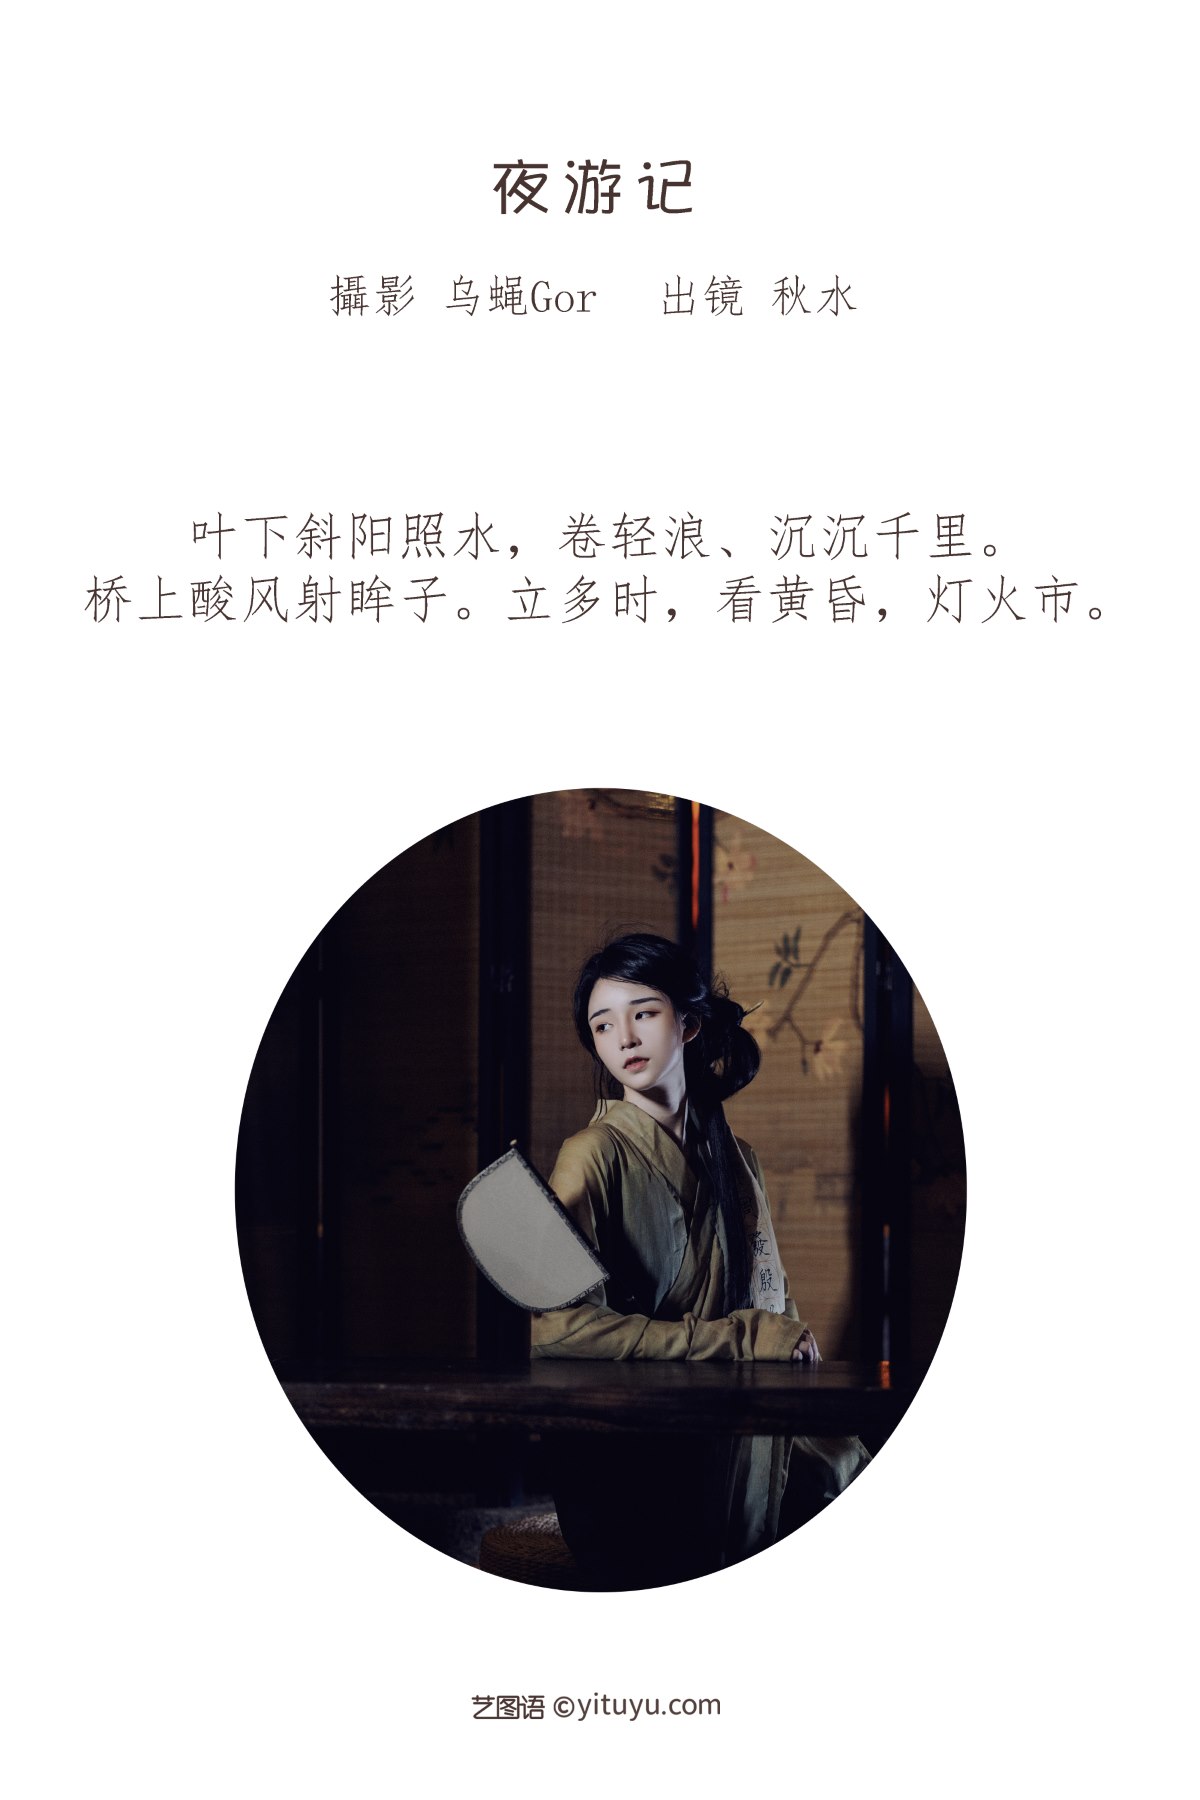 YiTuYu艺图语 Vol 2014 Qiu Shui 0001 6312781723.jpg